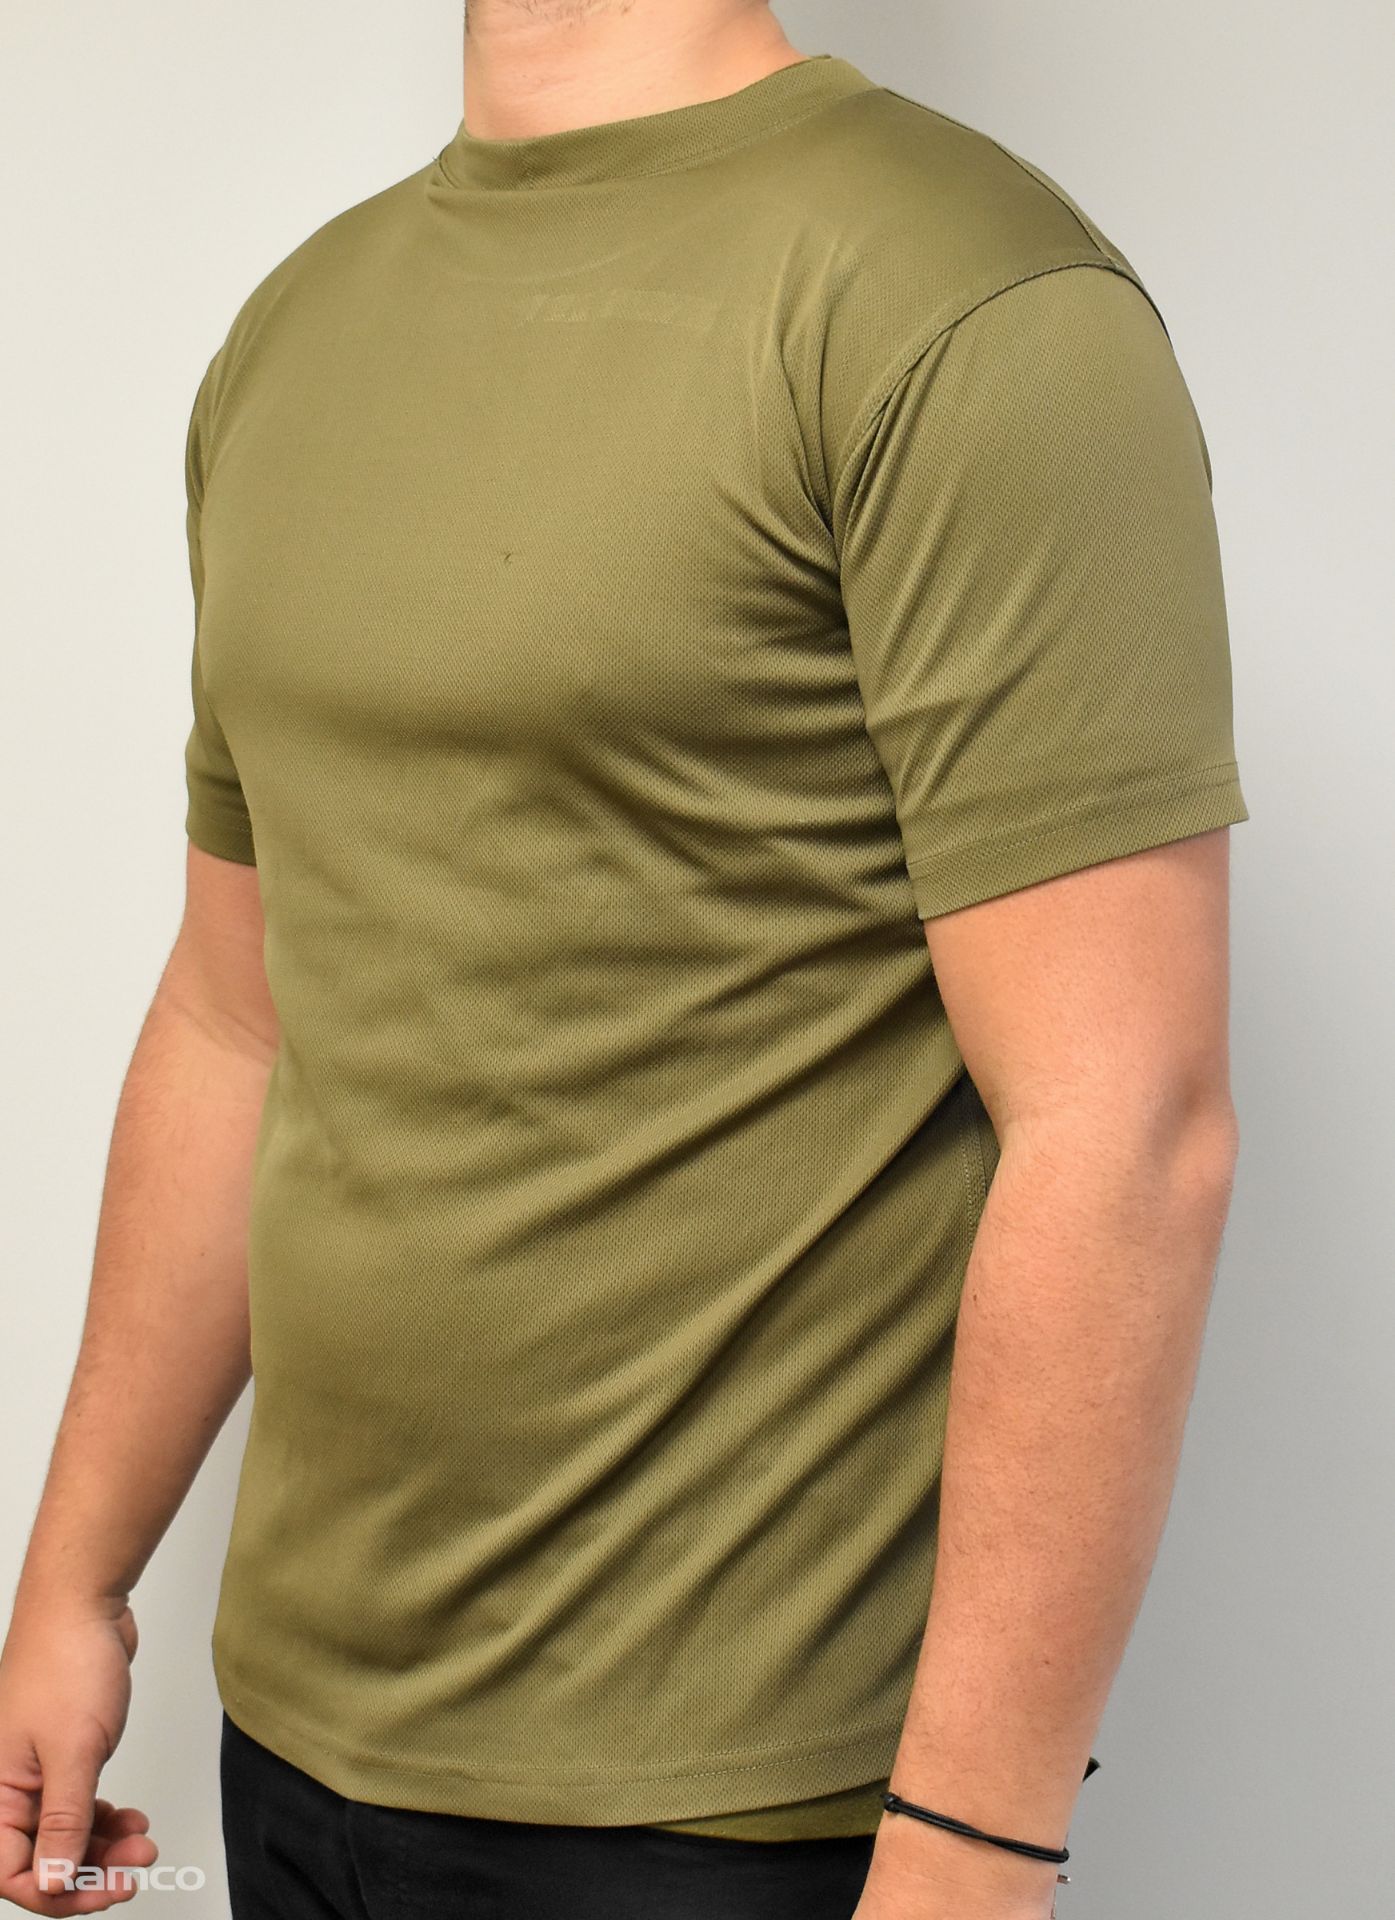 50x British Army combat T-shirts anti static - mixed grades and sizes - Image 2 of 12